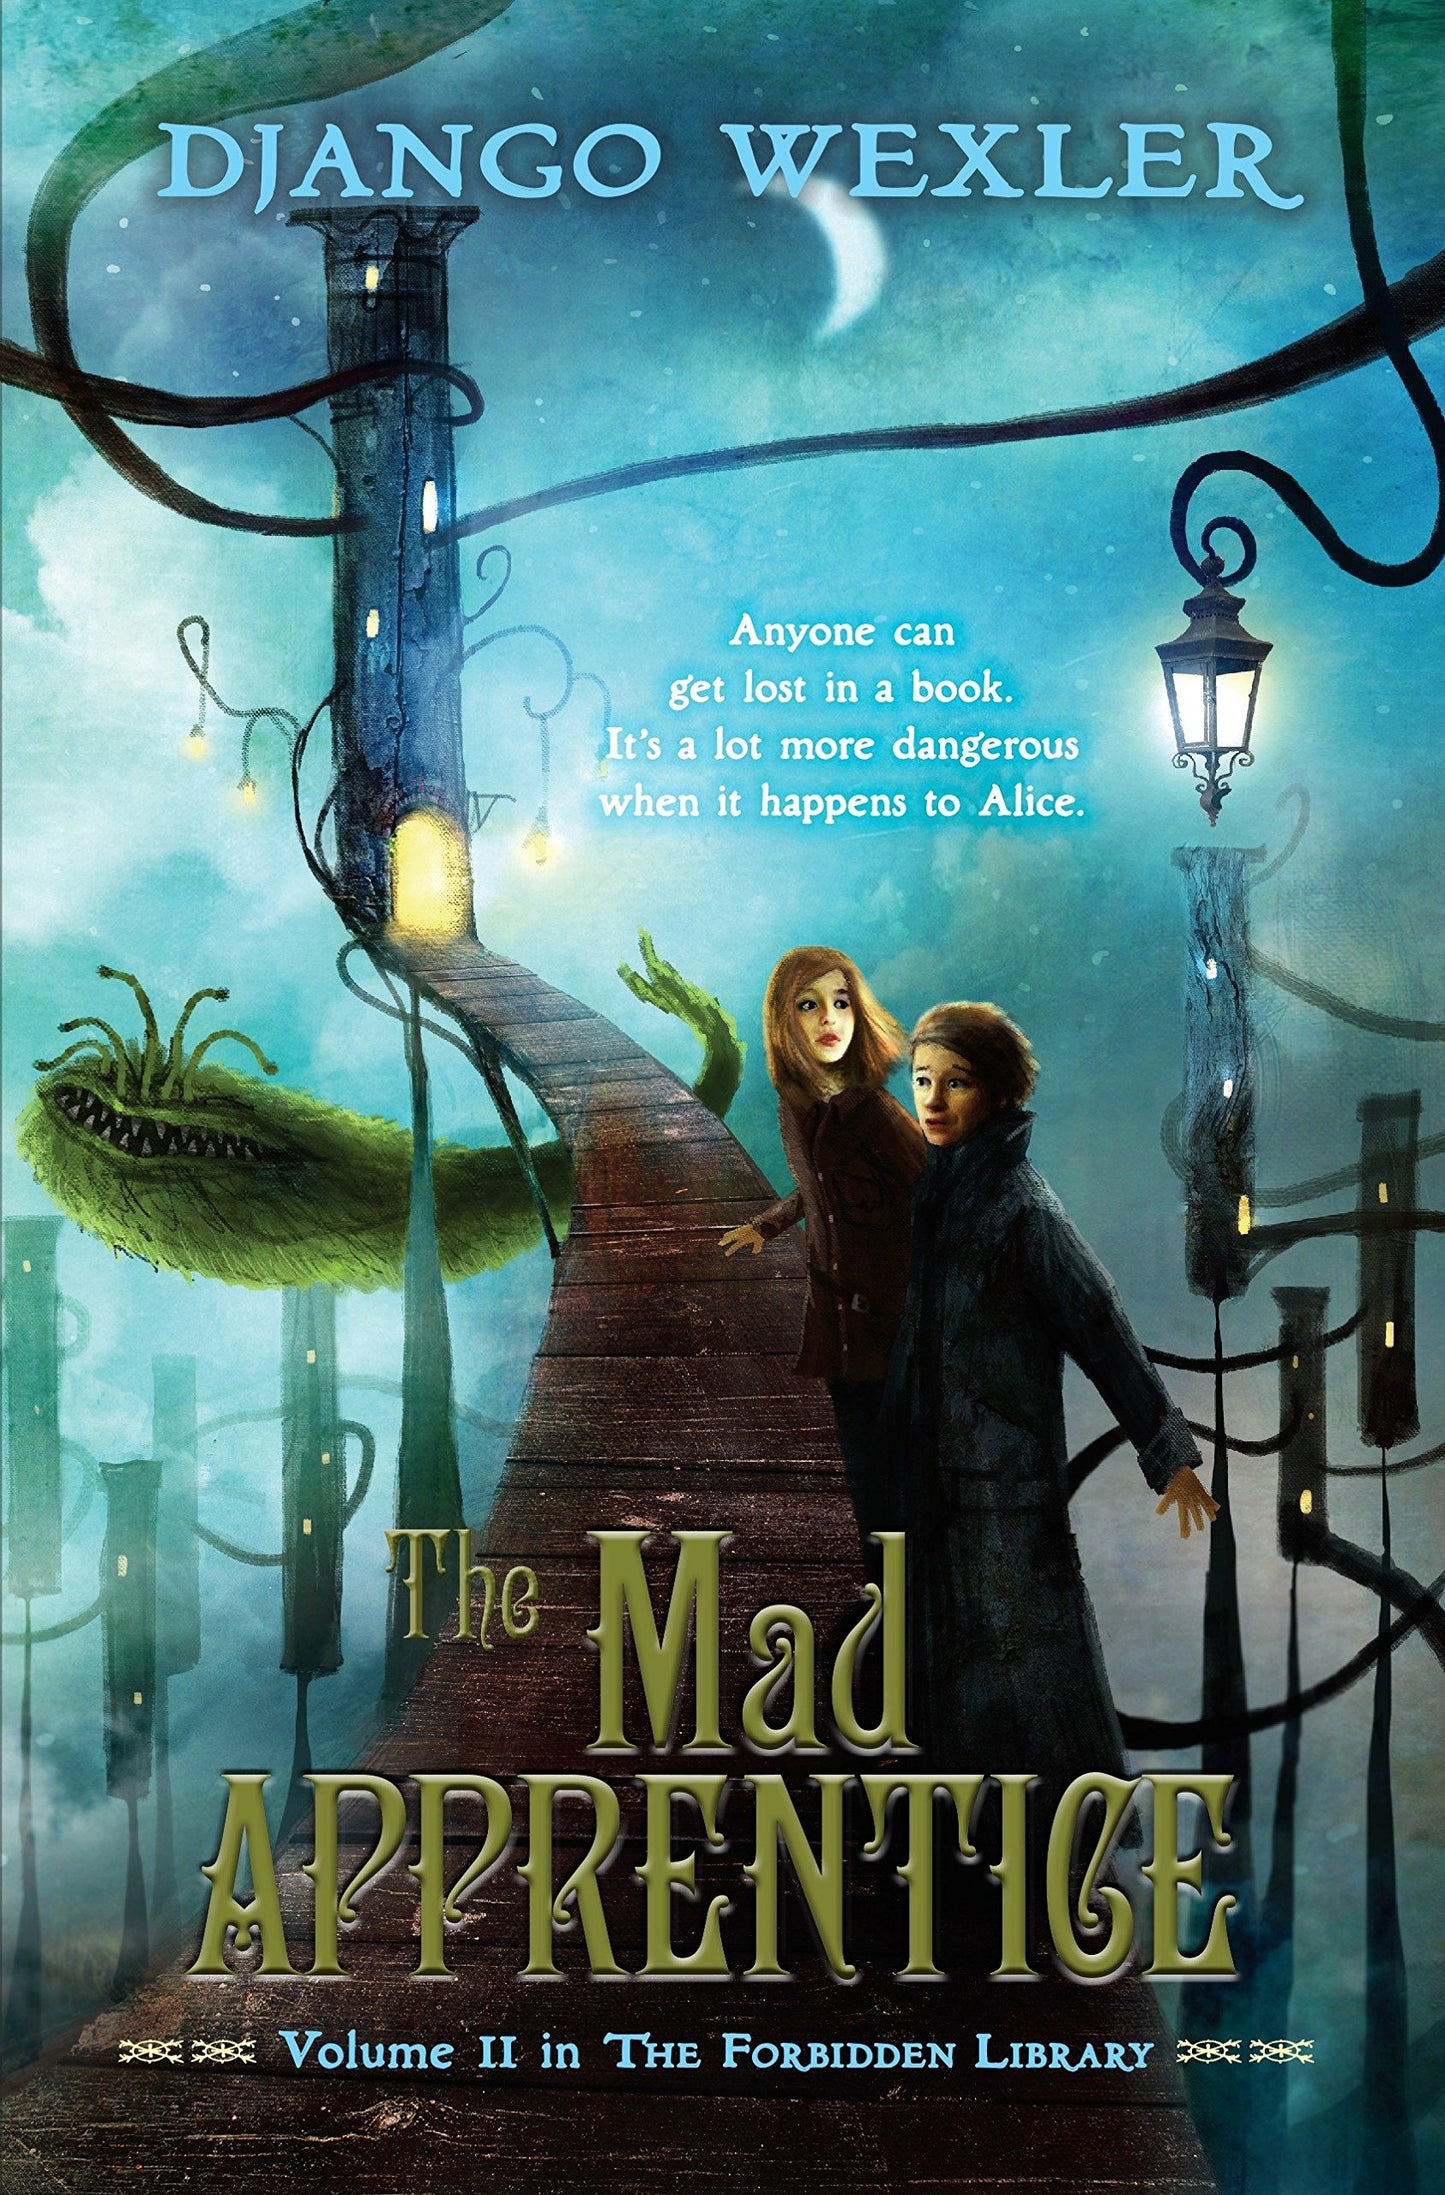 The Mad Apprentice by Django Wexler (Hardcover)